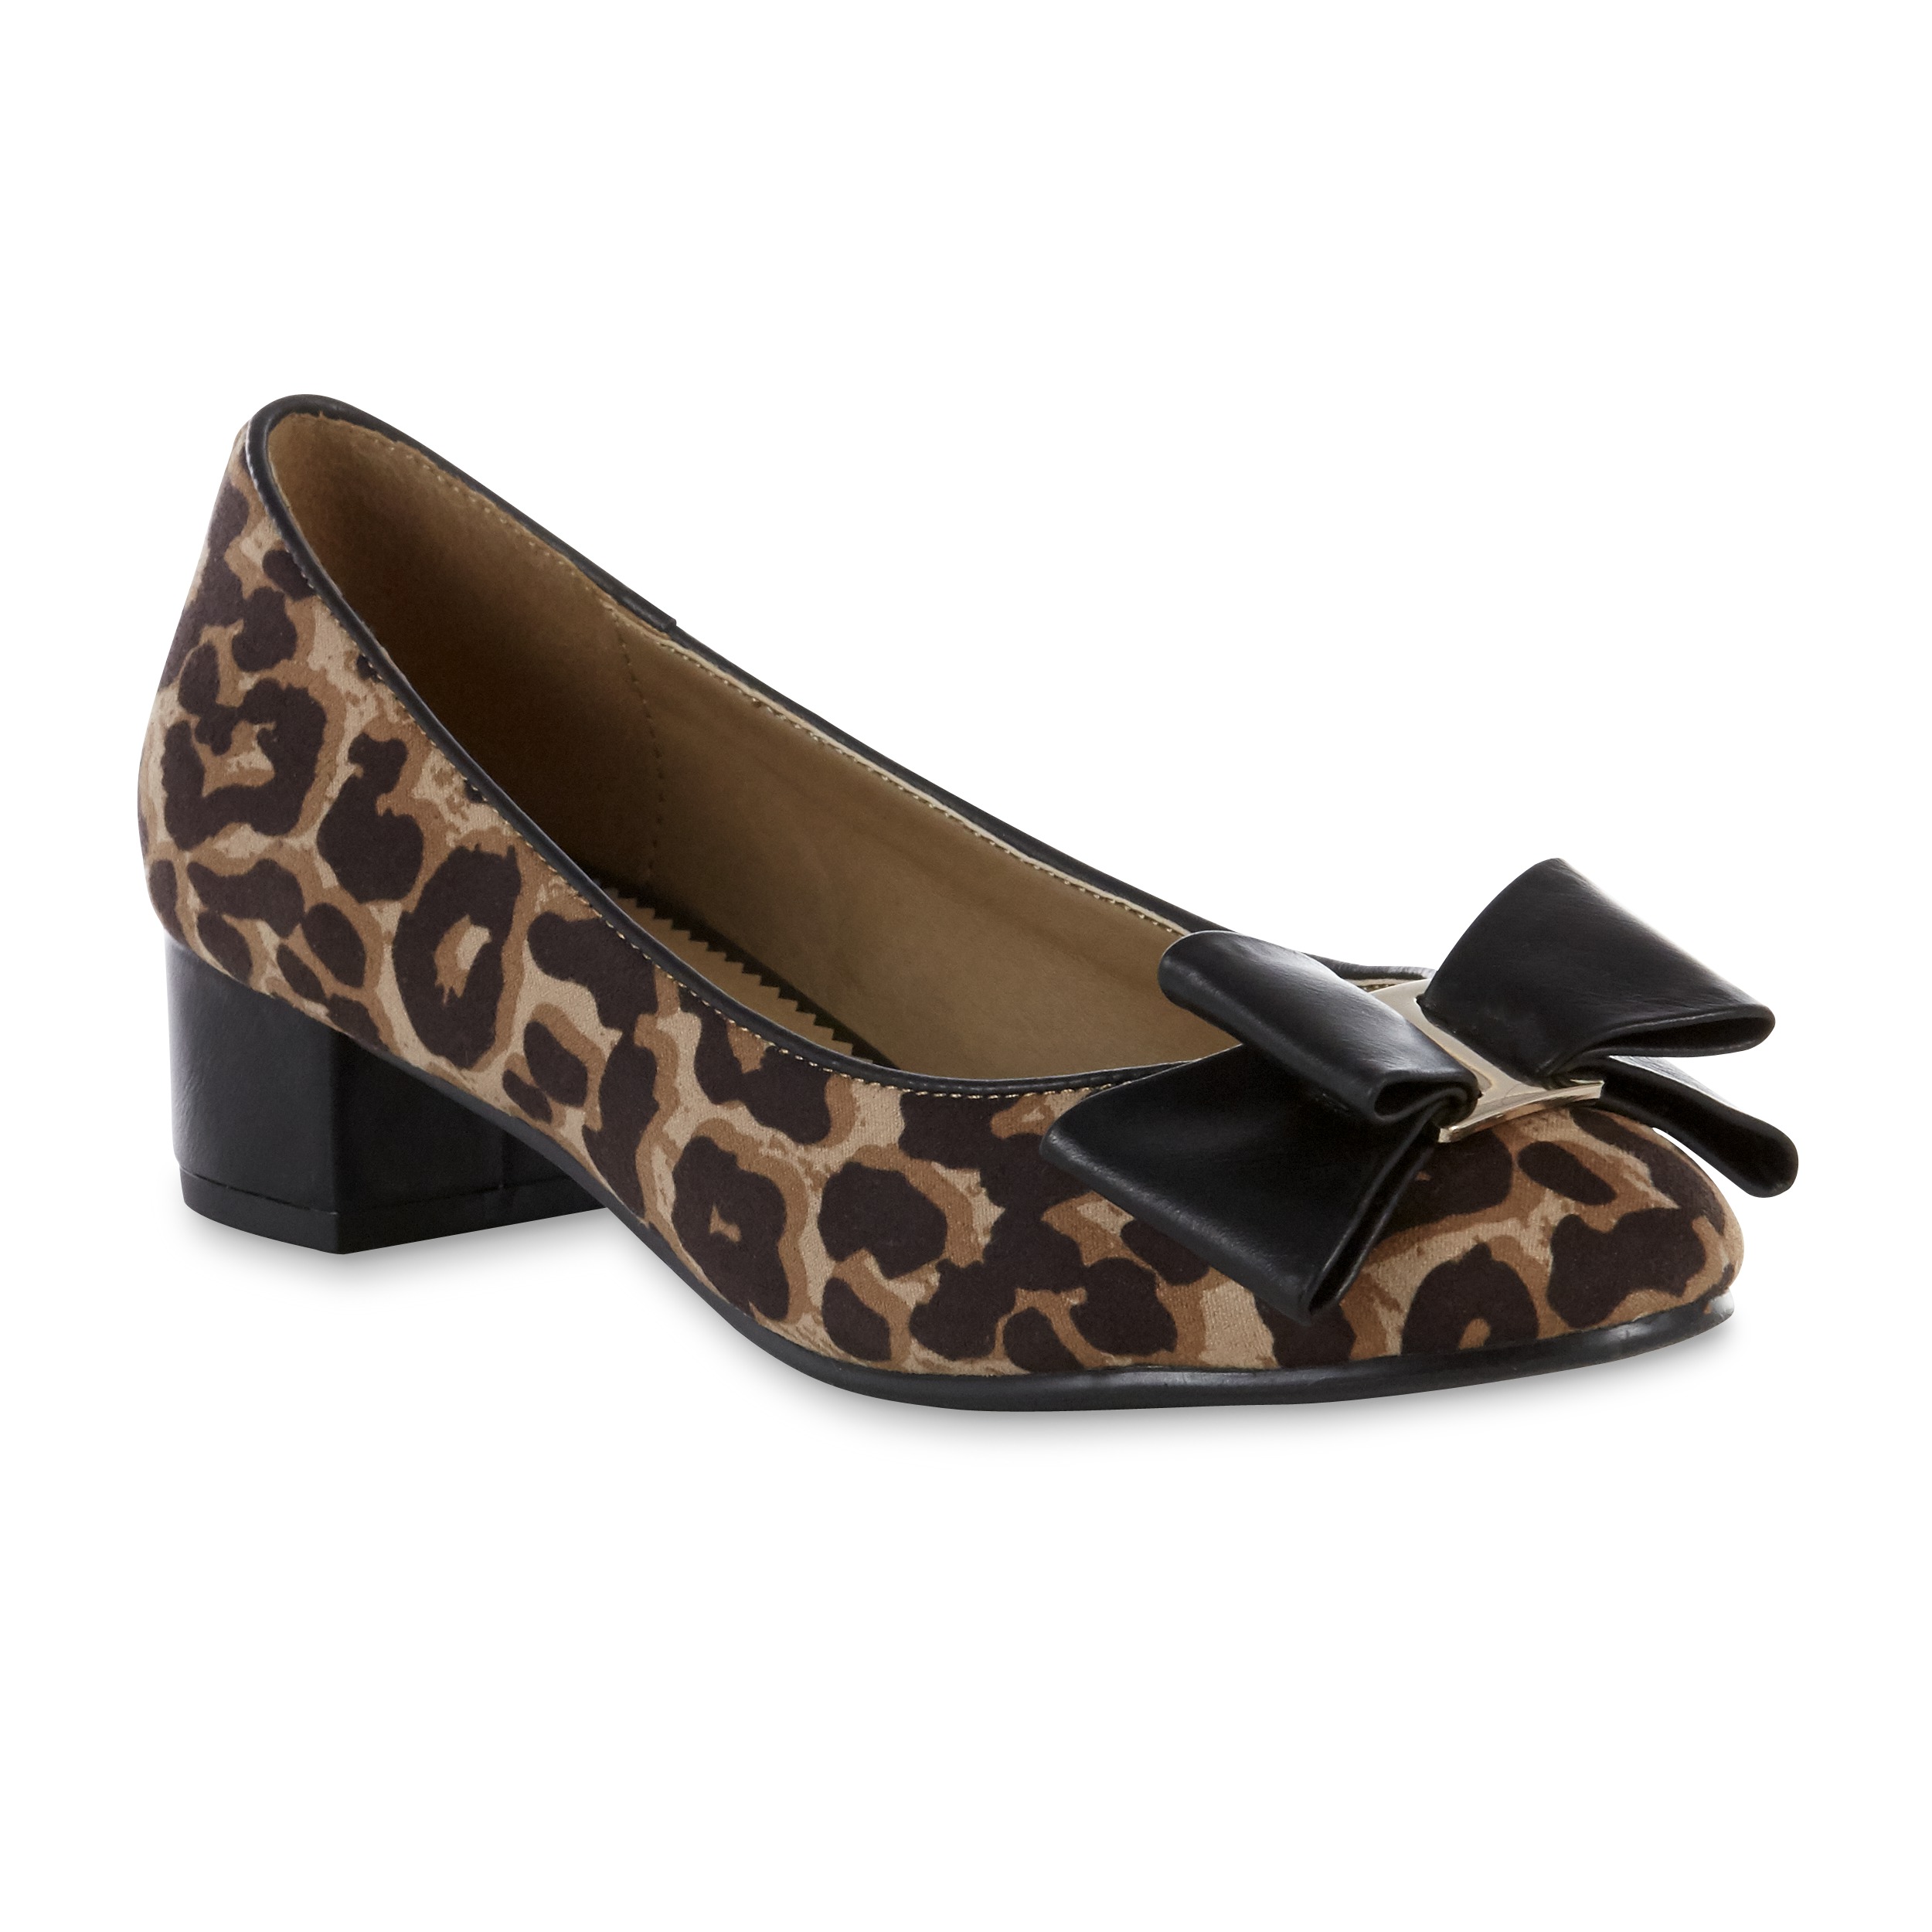 Covington Women's Boa Black/Leopard Shoe